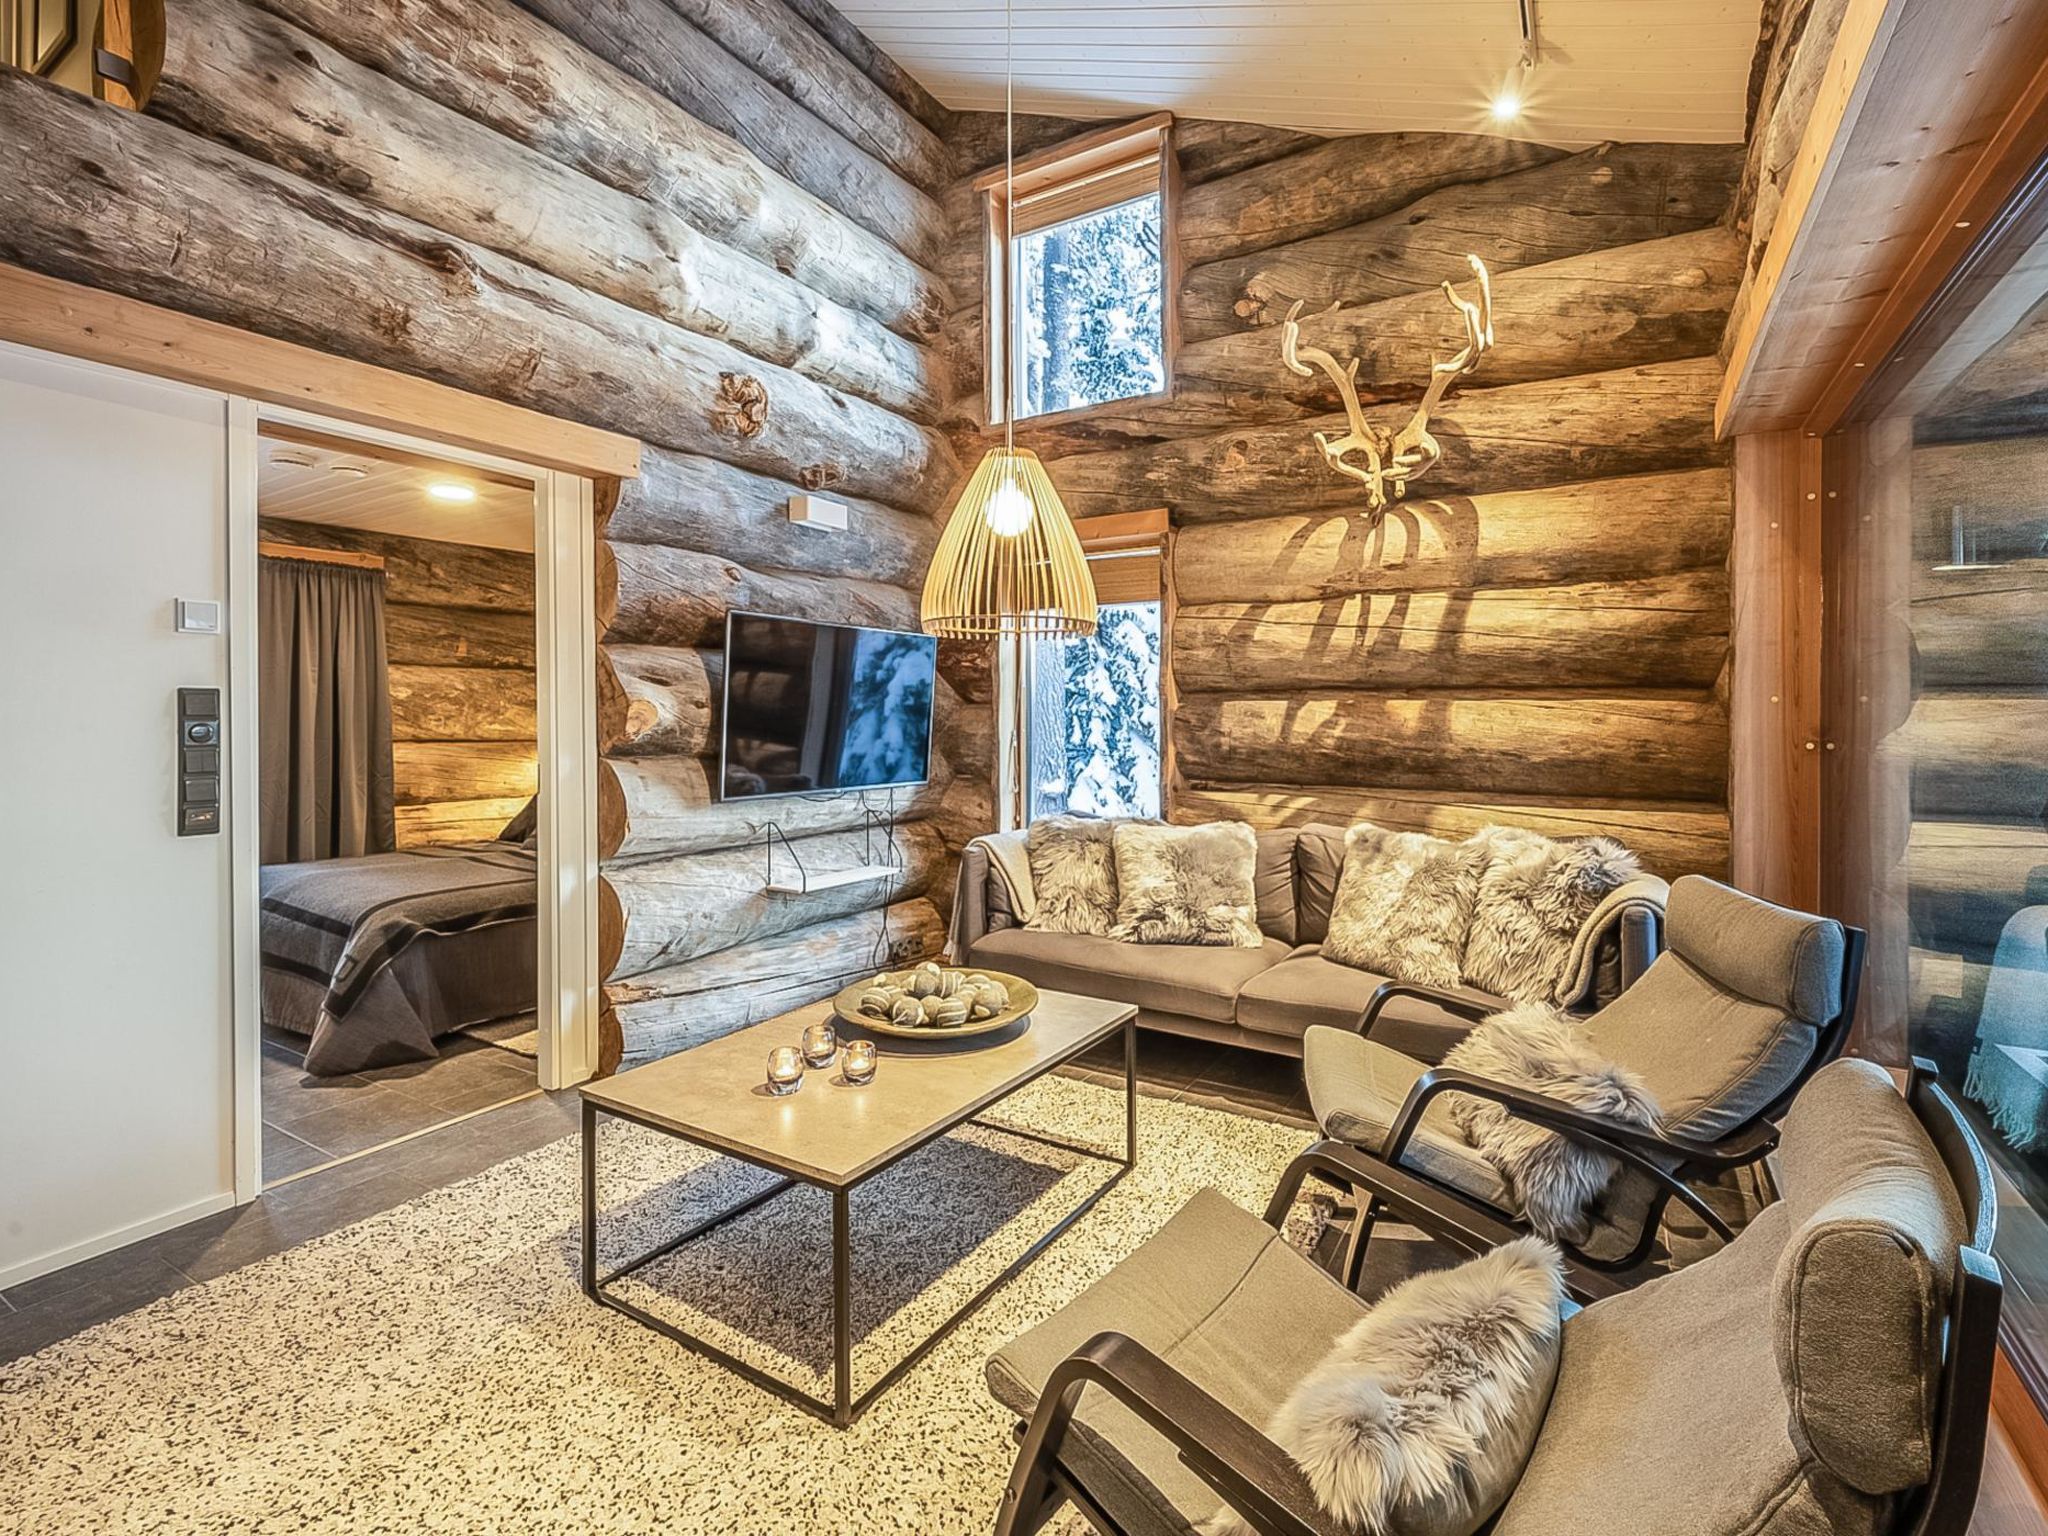 Photo 5 - 3 bedroom House in Kuusamo with sauna and mountain view